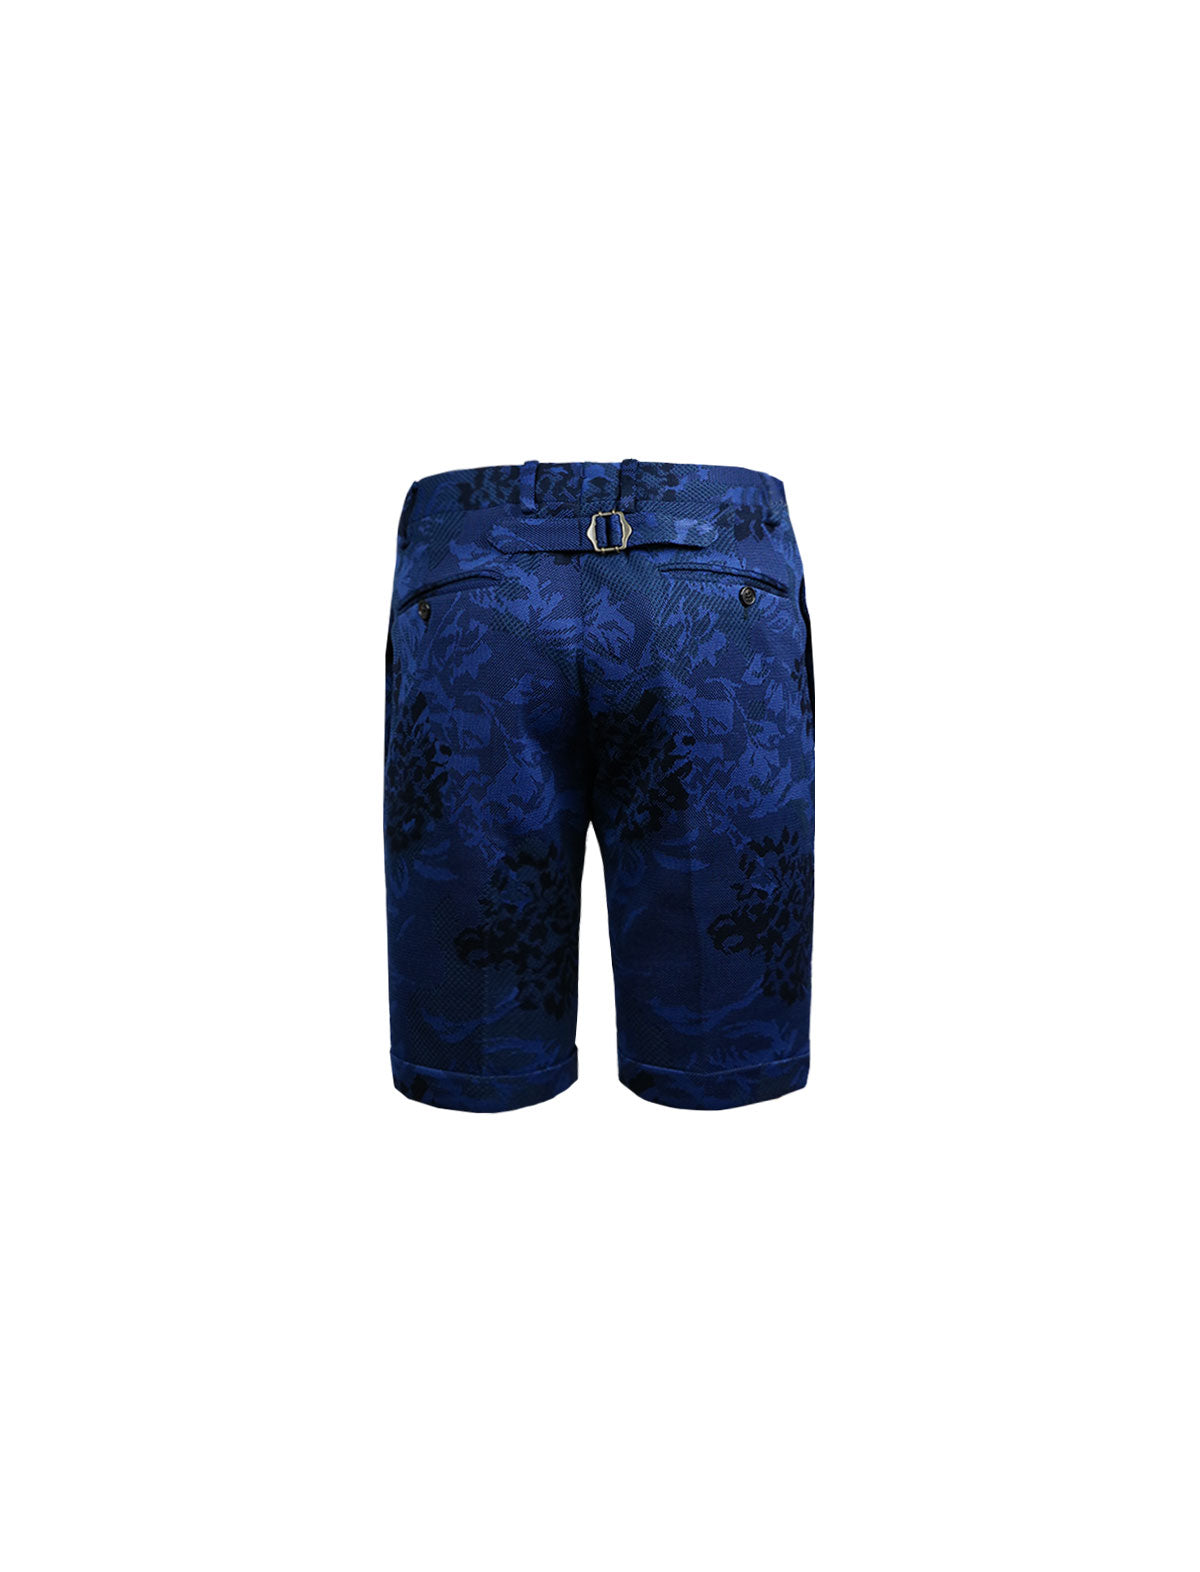 Gabriele Pasini Floral Woven Shorts in Cobalt Blue